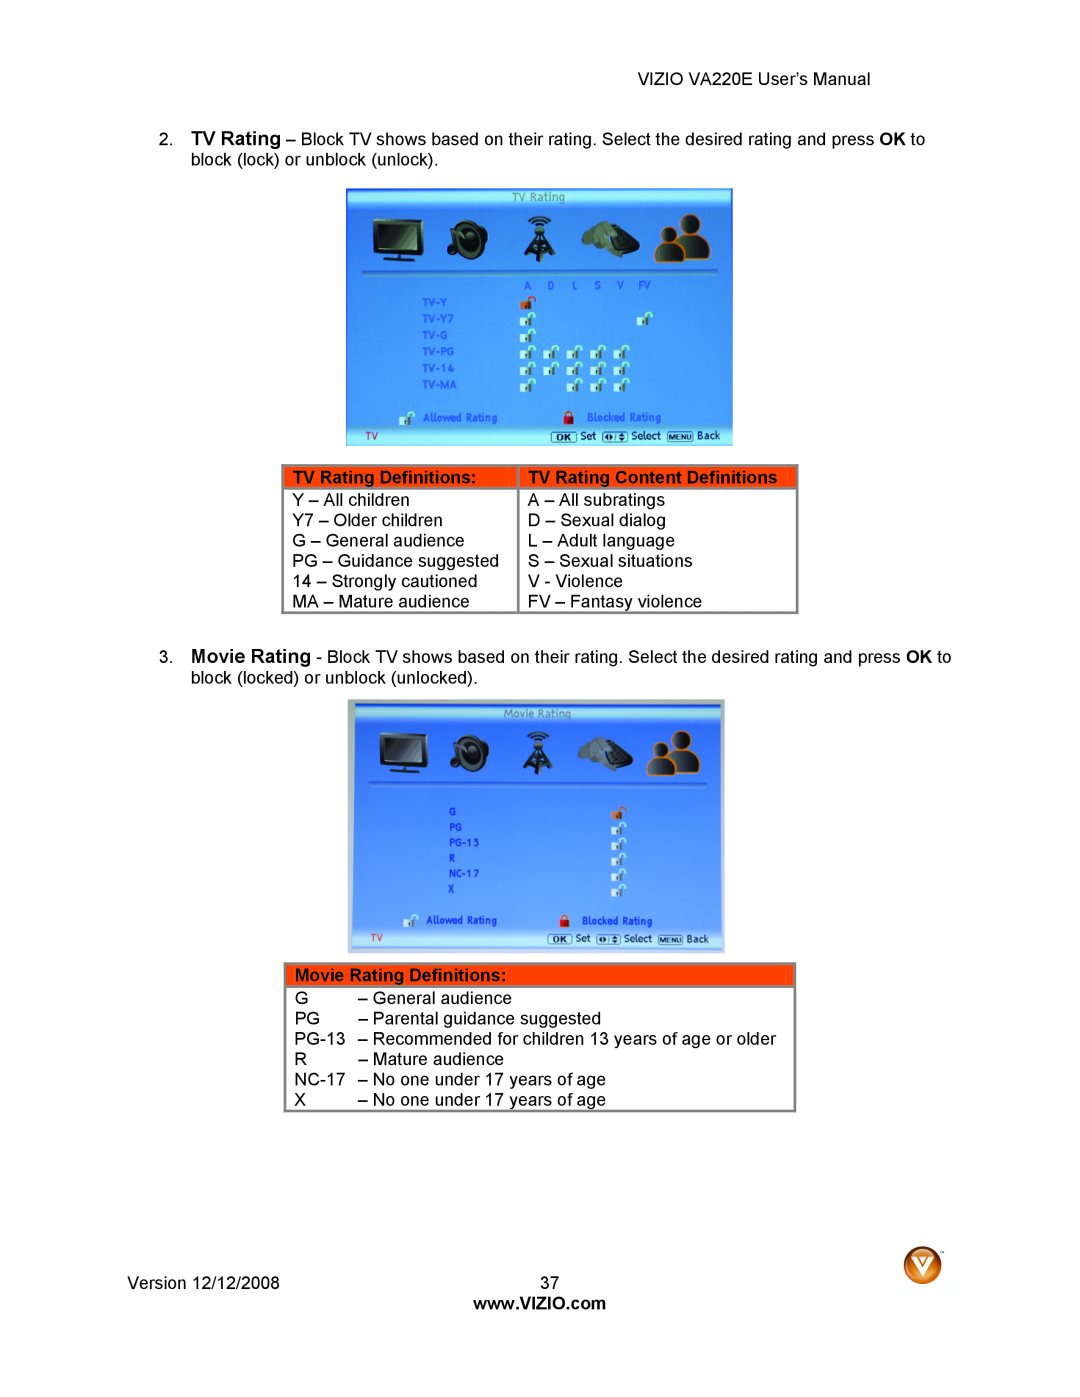 Vizio VA220E user manual TV Rating Definitions, TV Rating Content Definitions, Movie Rating Definitions 